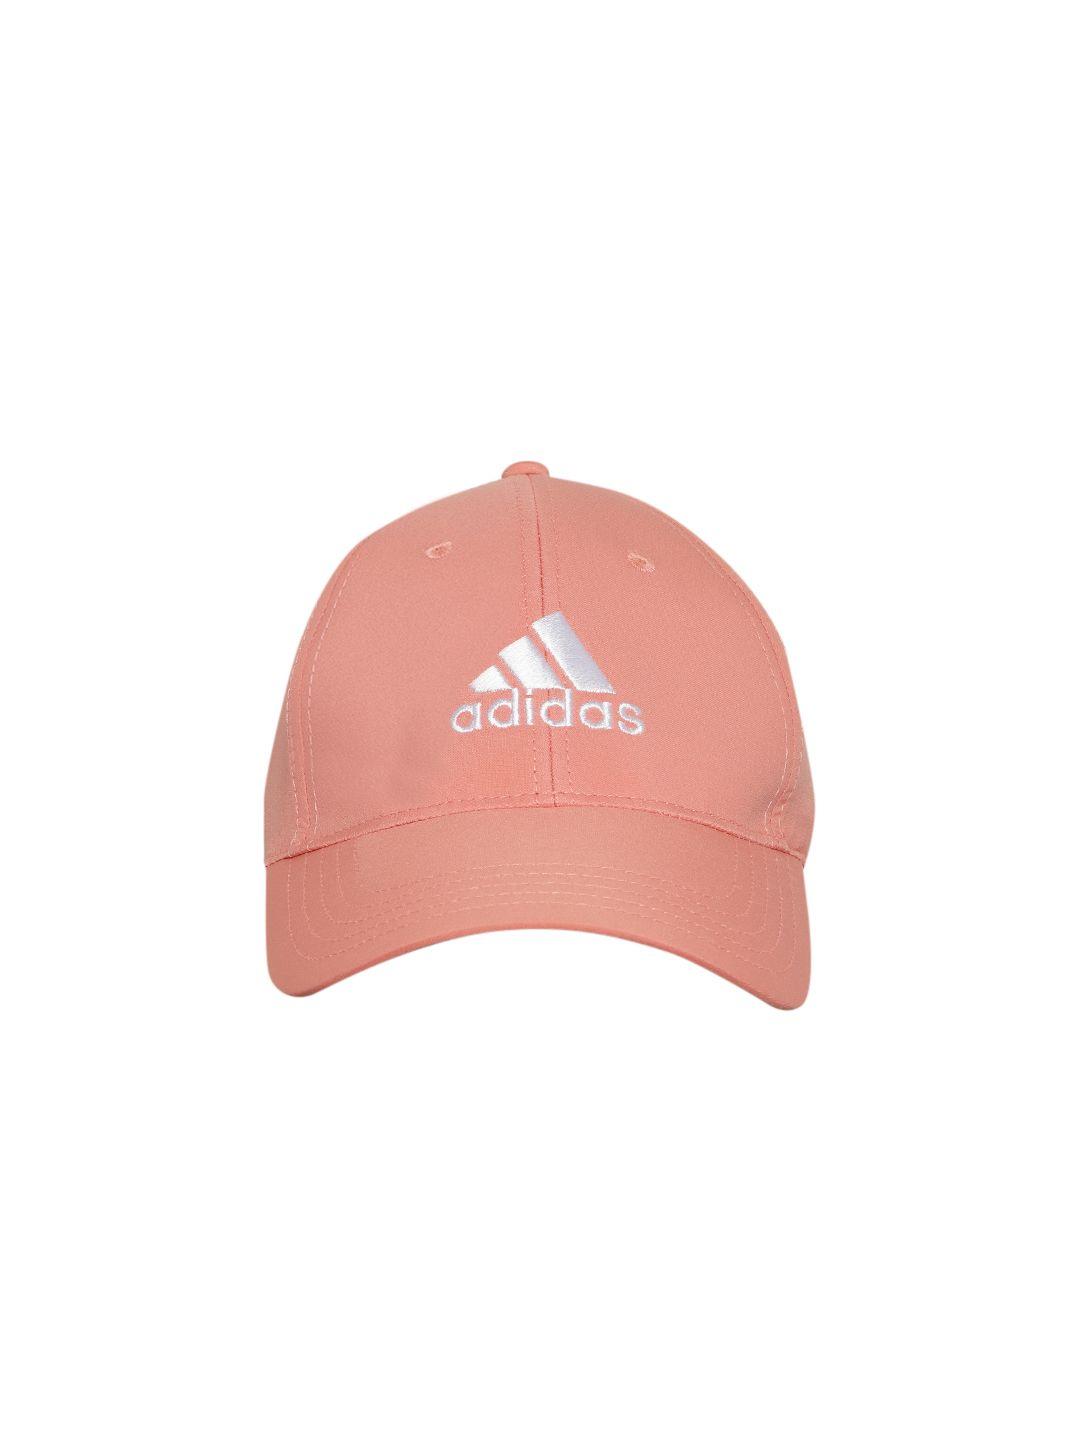 adidas unisex brand logo embroidered lightweight baseball cap